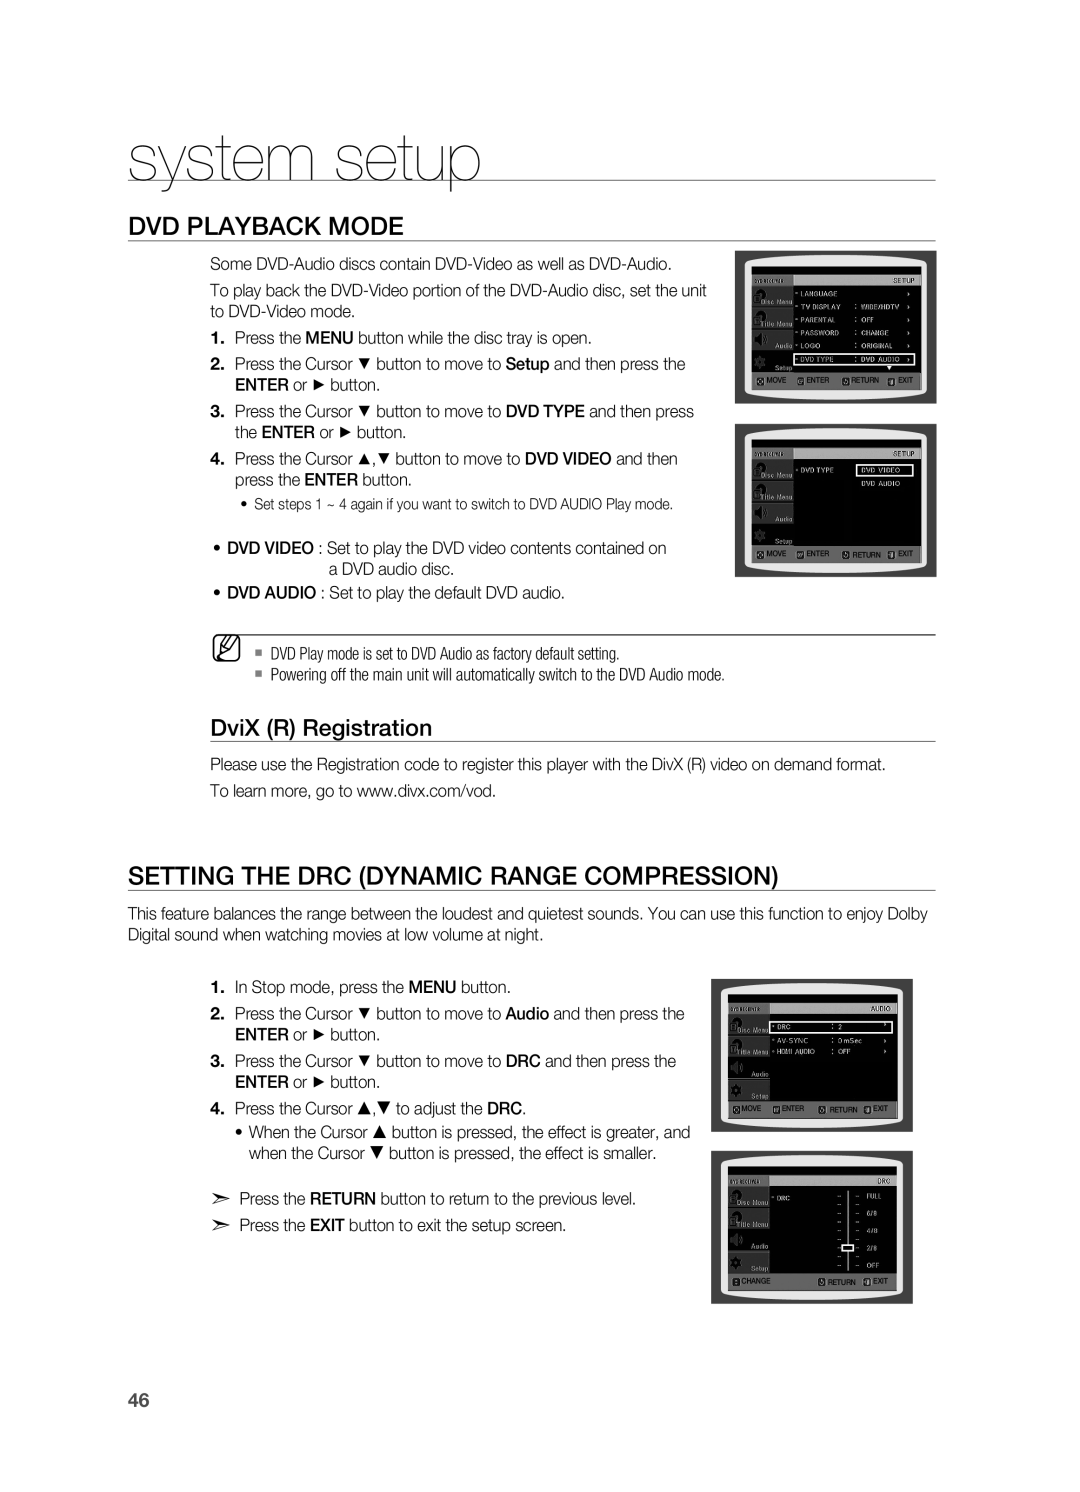 Samsung HT-A100 user manual DVD Playback Mode, Setting the DRC Dynamic Range Compression, DviX R Registration, system setup 